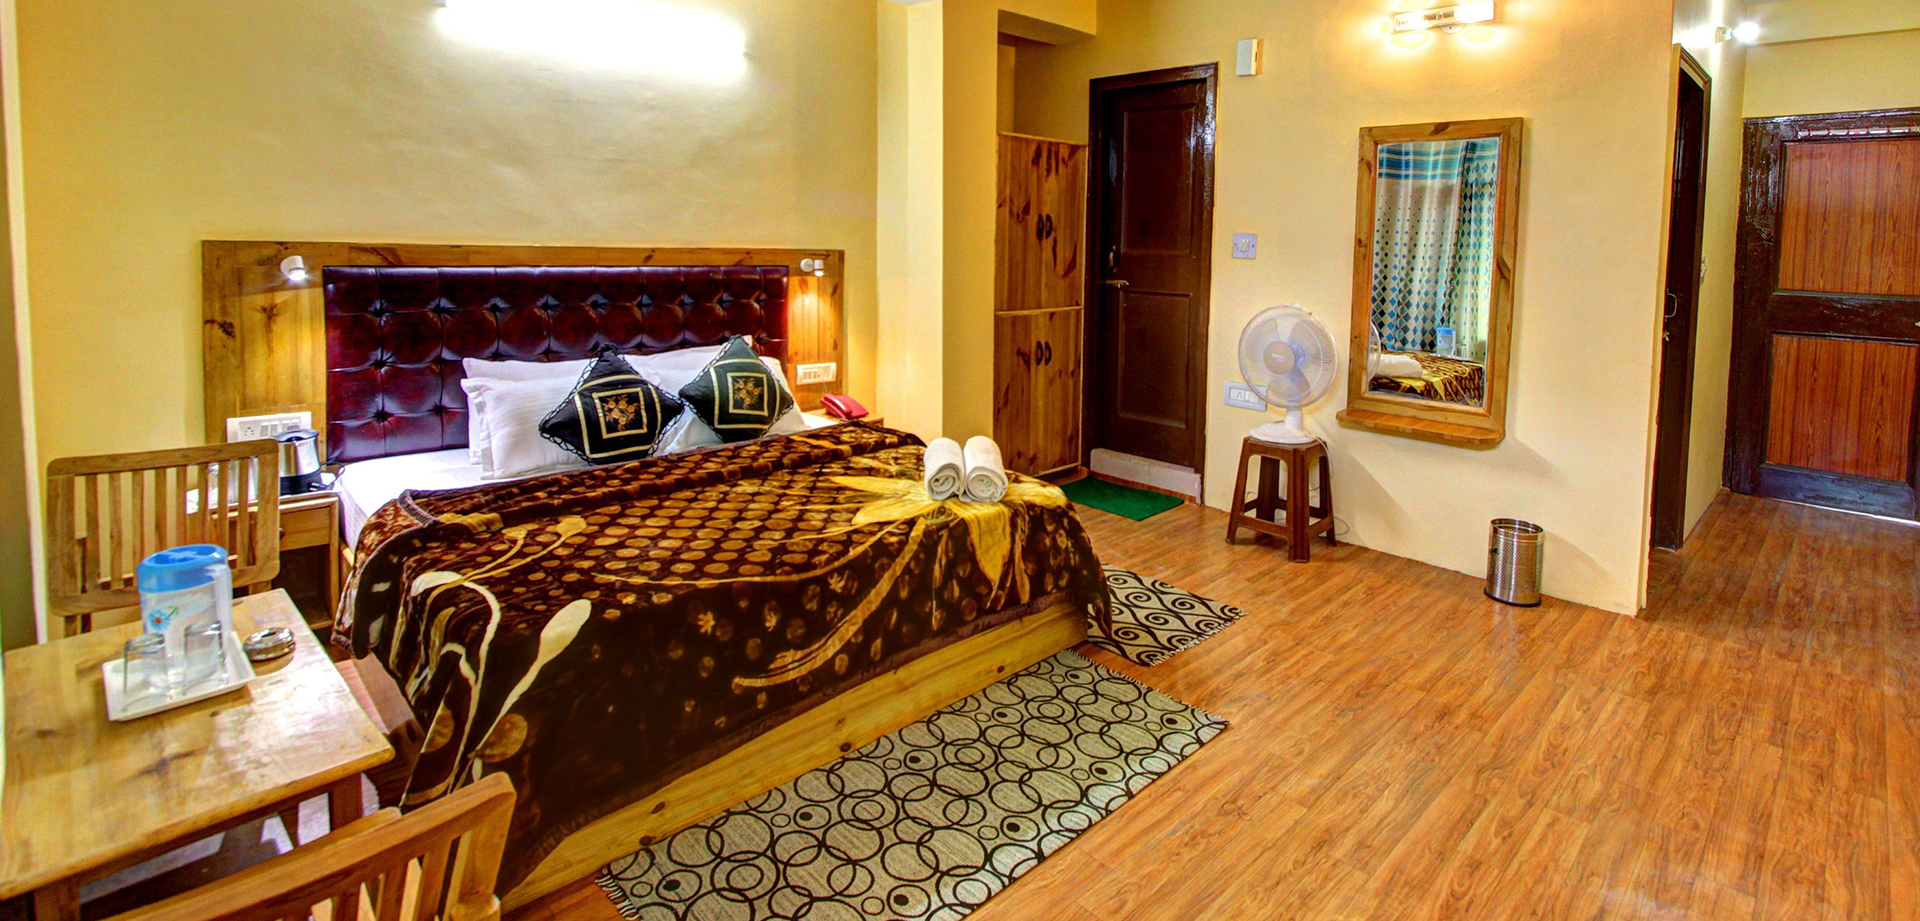 Room 2 in Manali Homestay